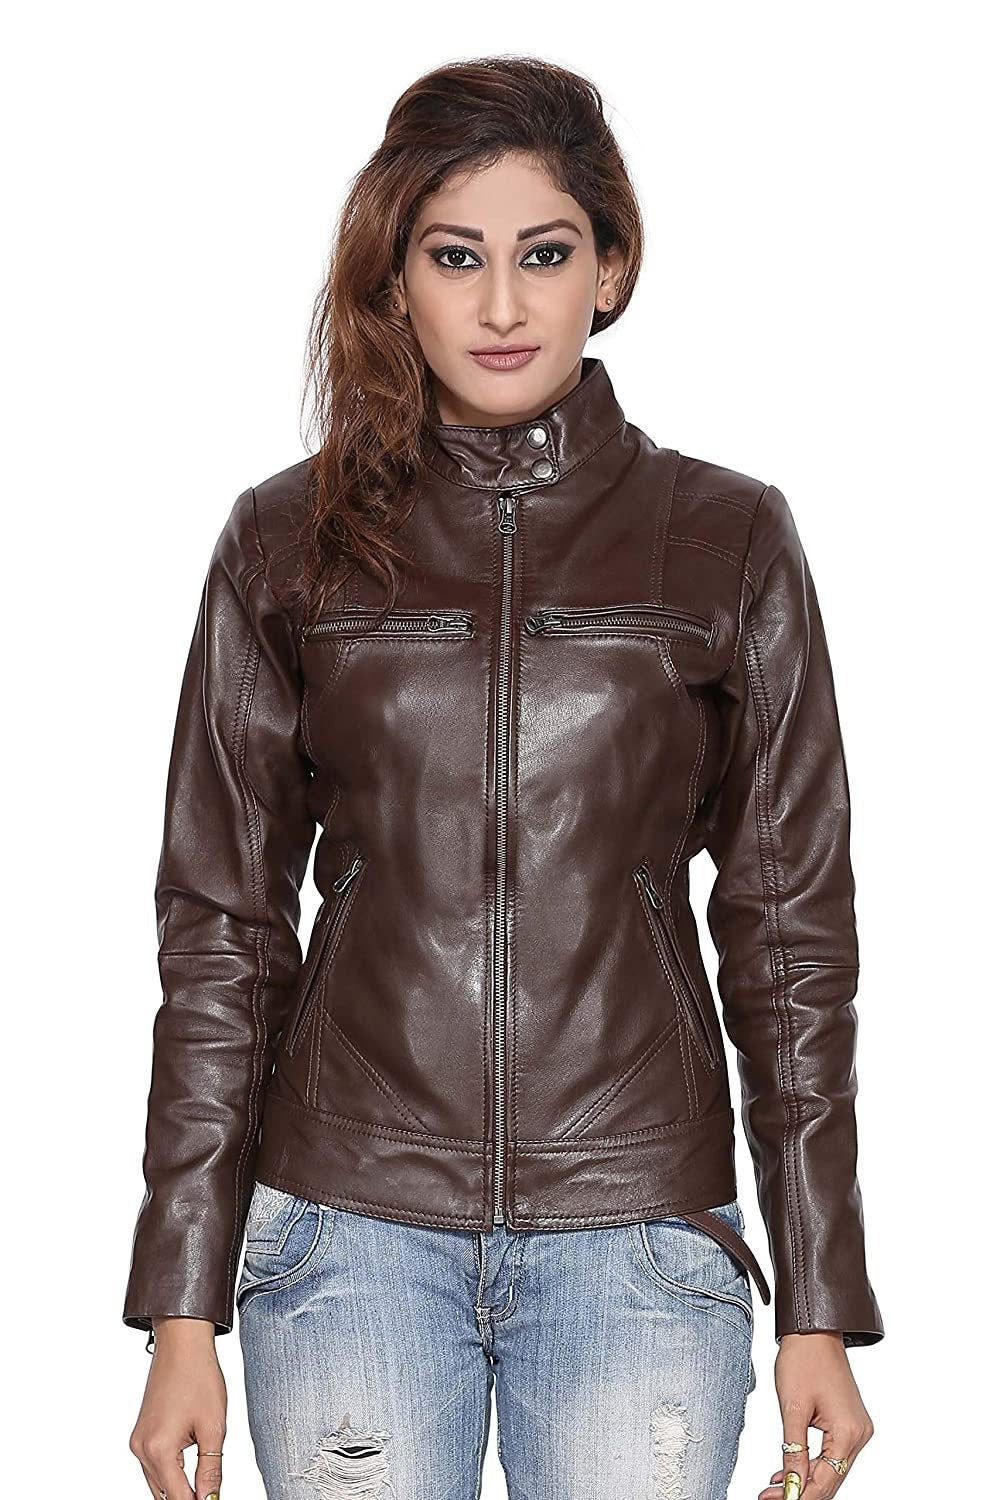 LINDSEY STREET Custom Made Genuine Leather Jacket for Women Stylish Slim Fit Leather Jacket Biker Jacket